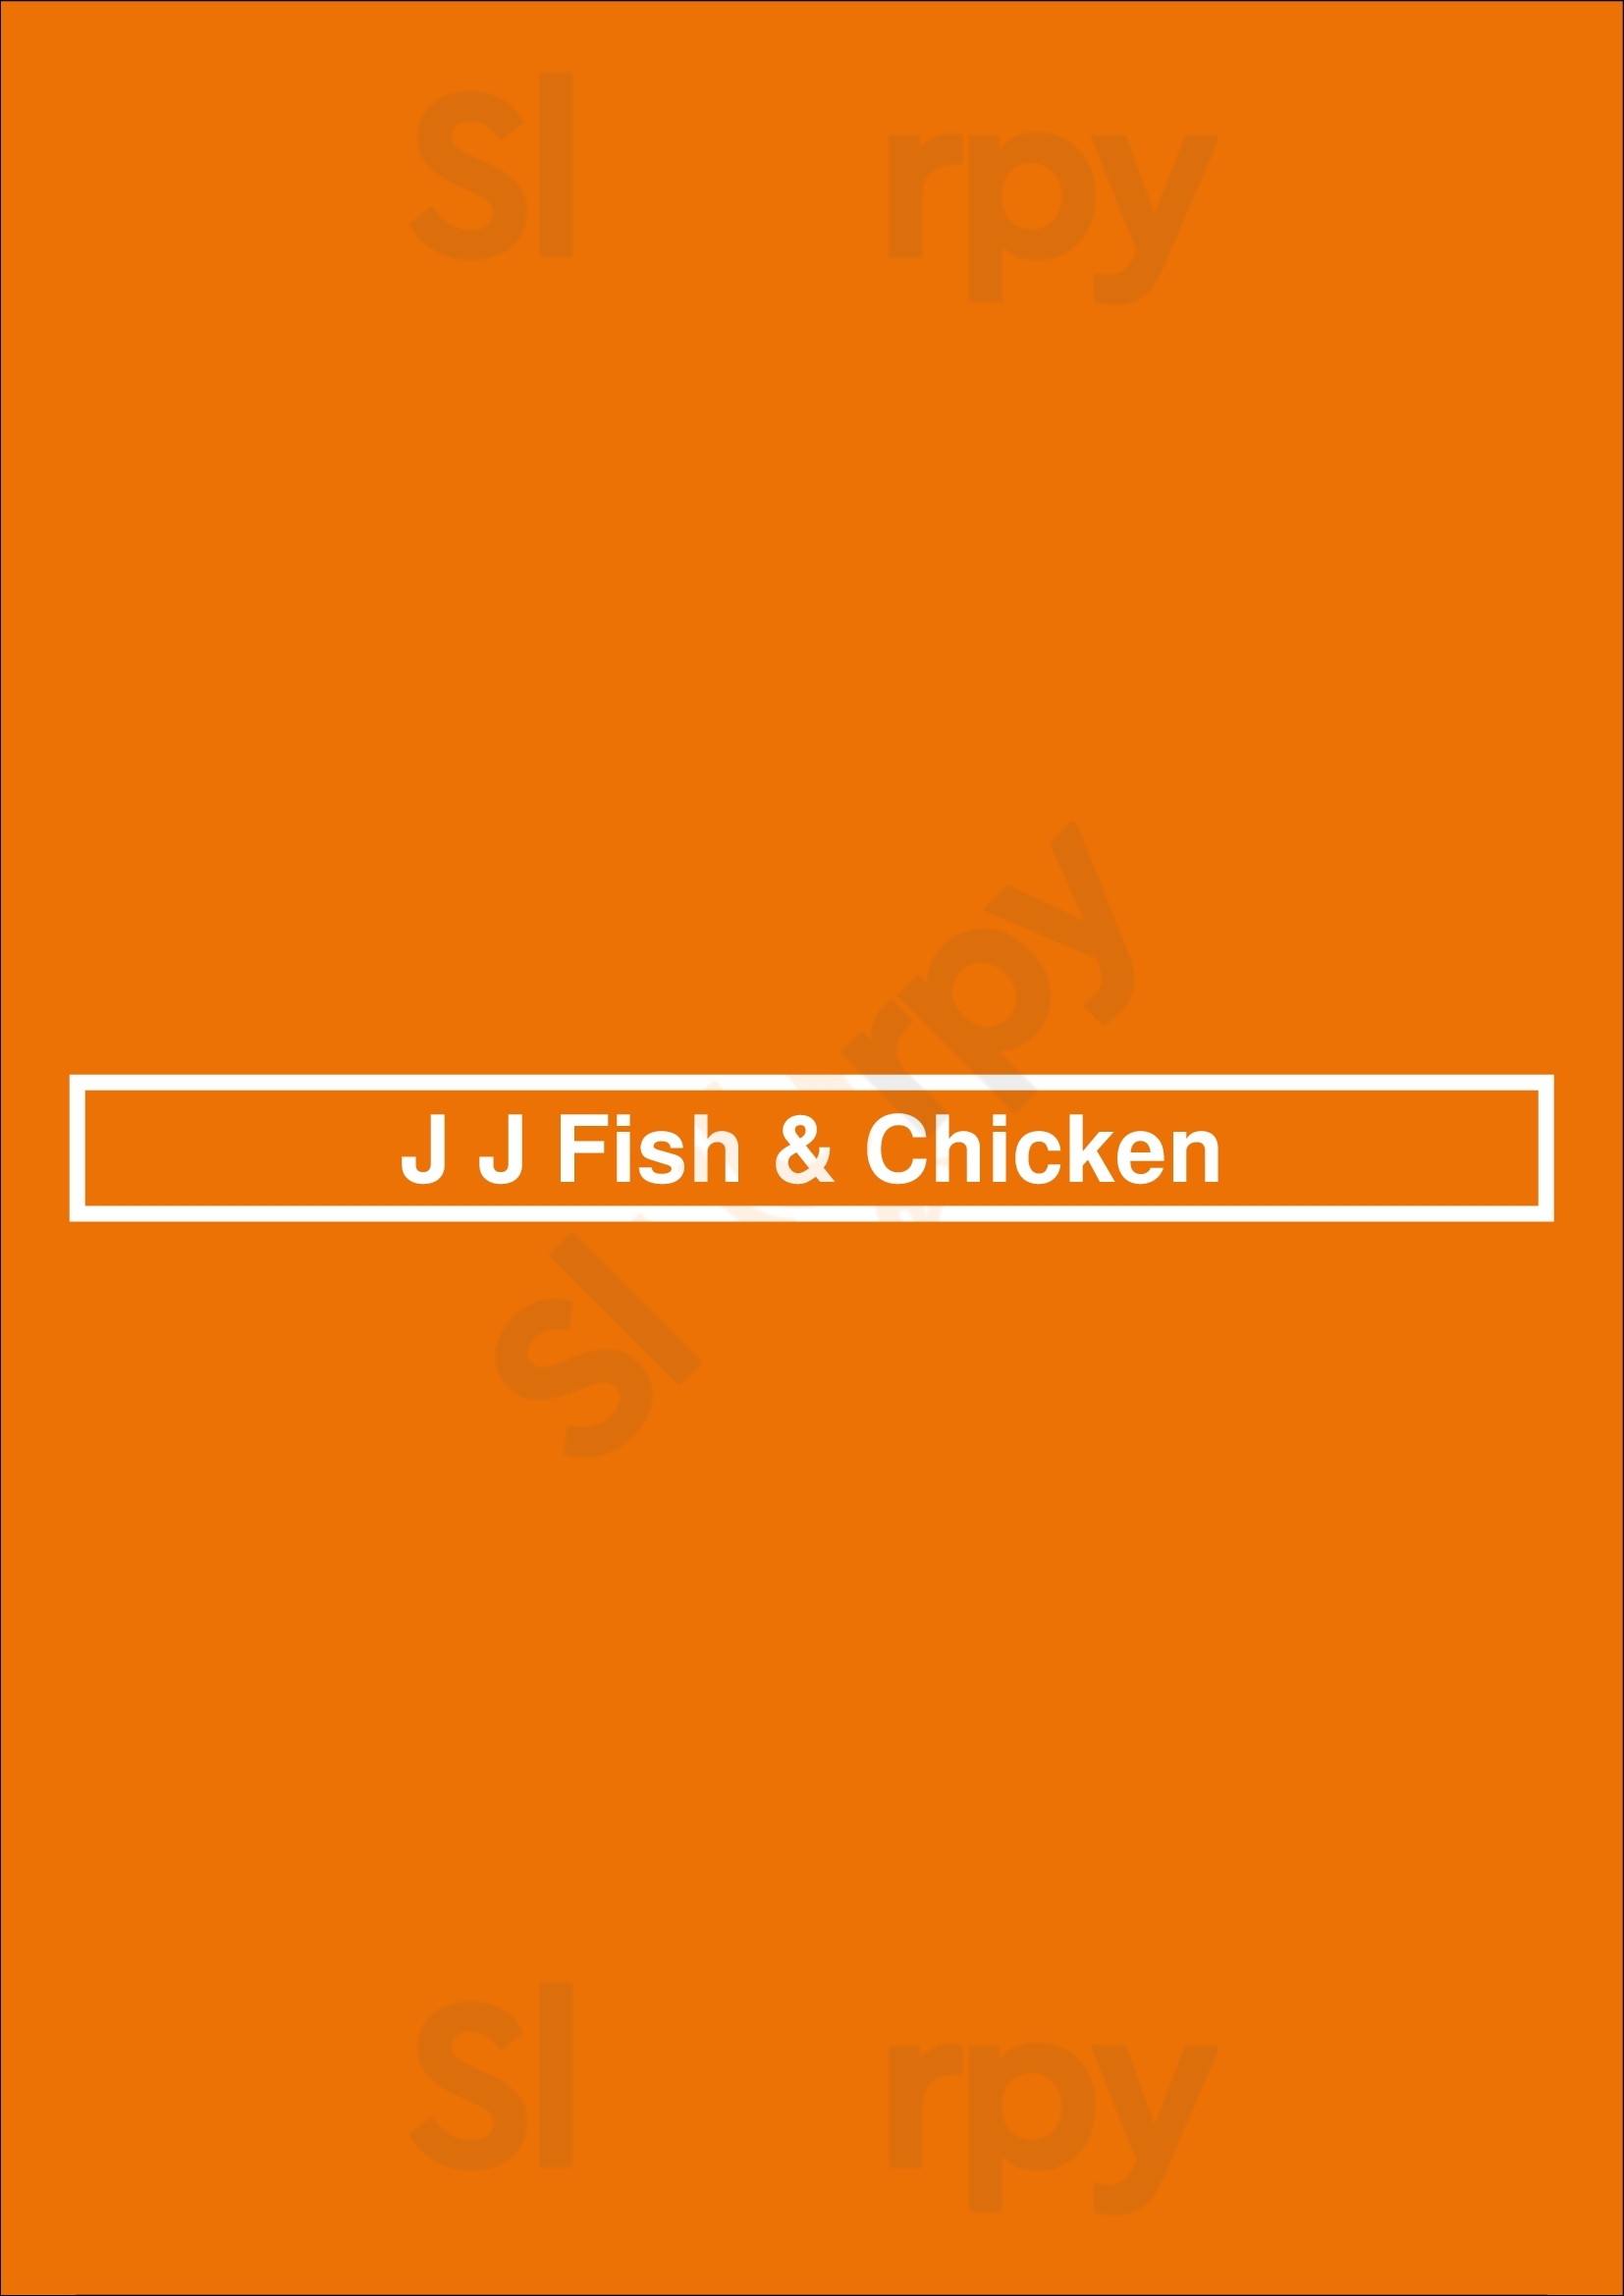 J J Fish & Chicken Detroit Menu - 1